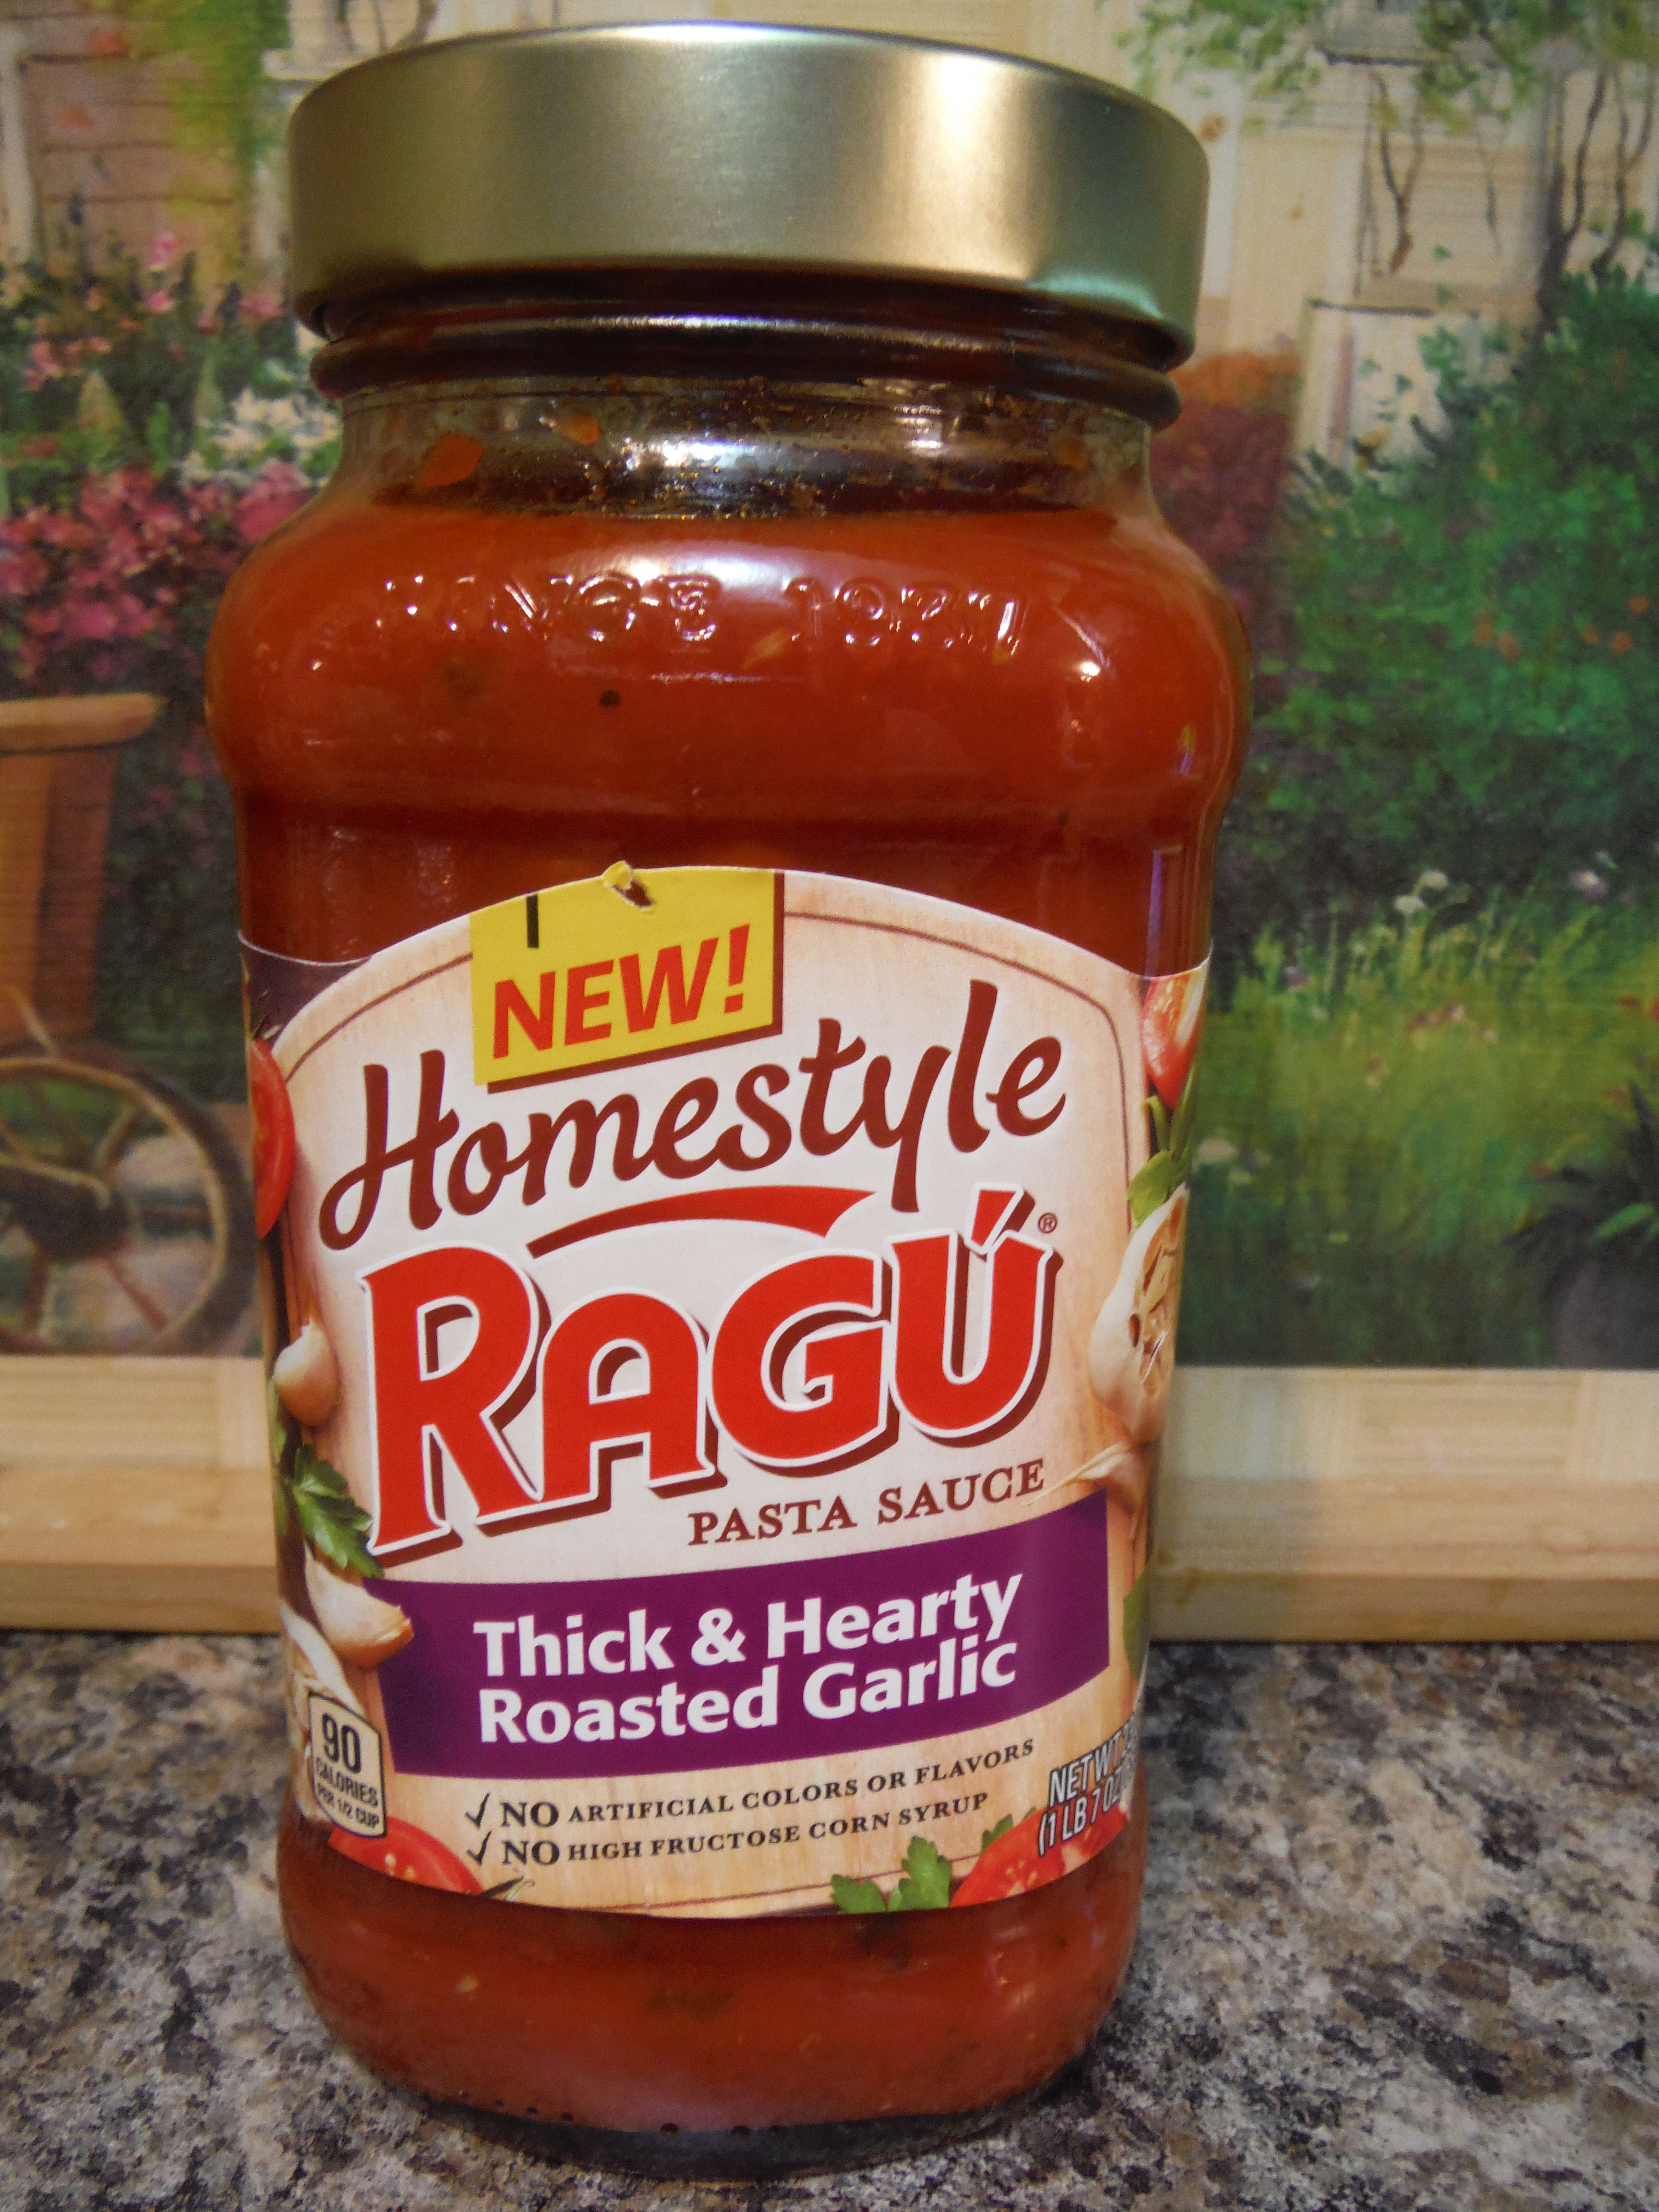 Delicious Ragu Homestyle Pasta Sauce! #Delicious #Thick #ad #Hearty